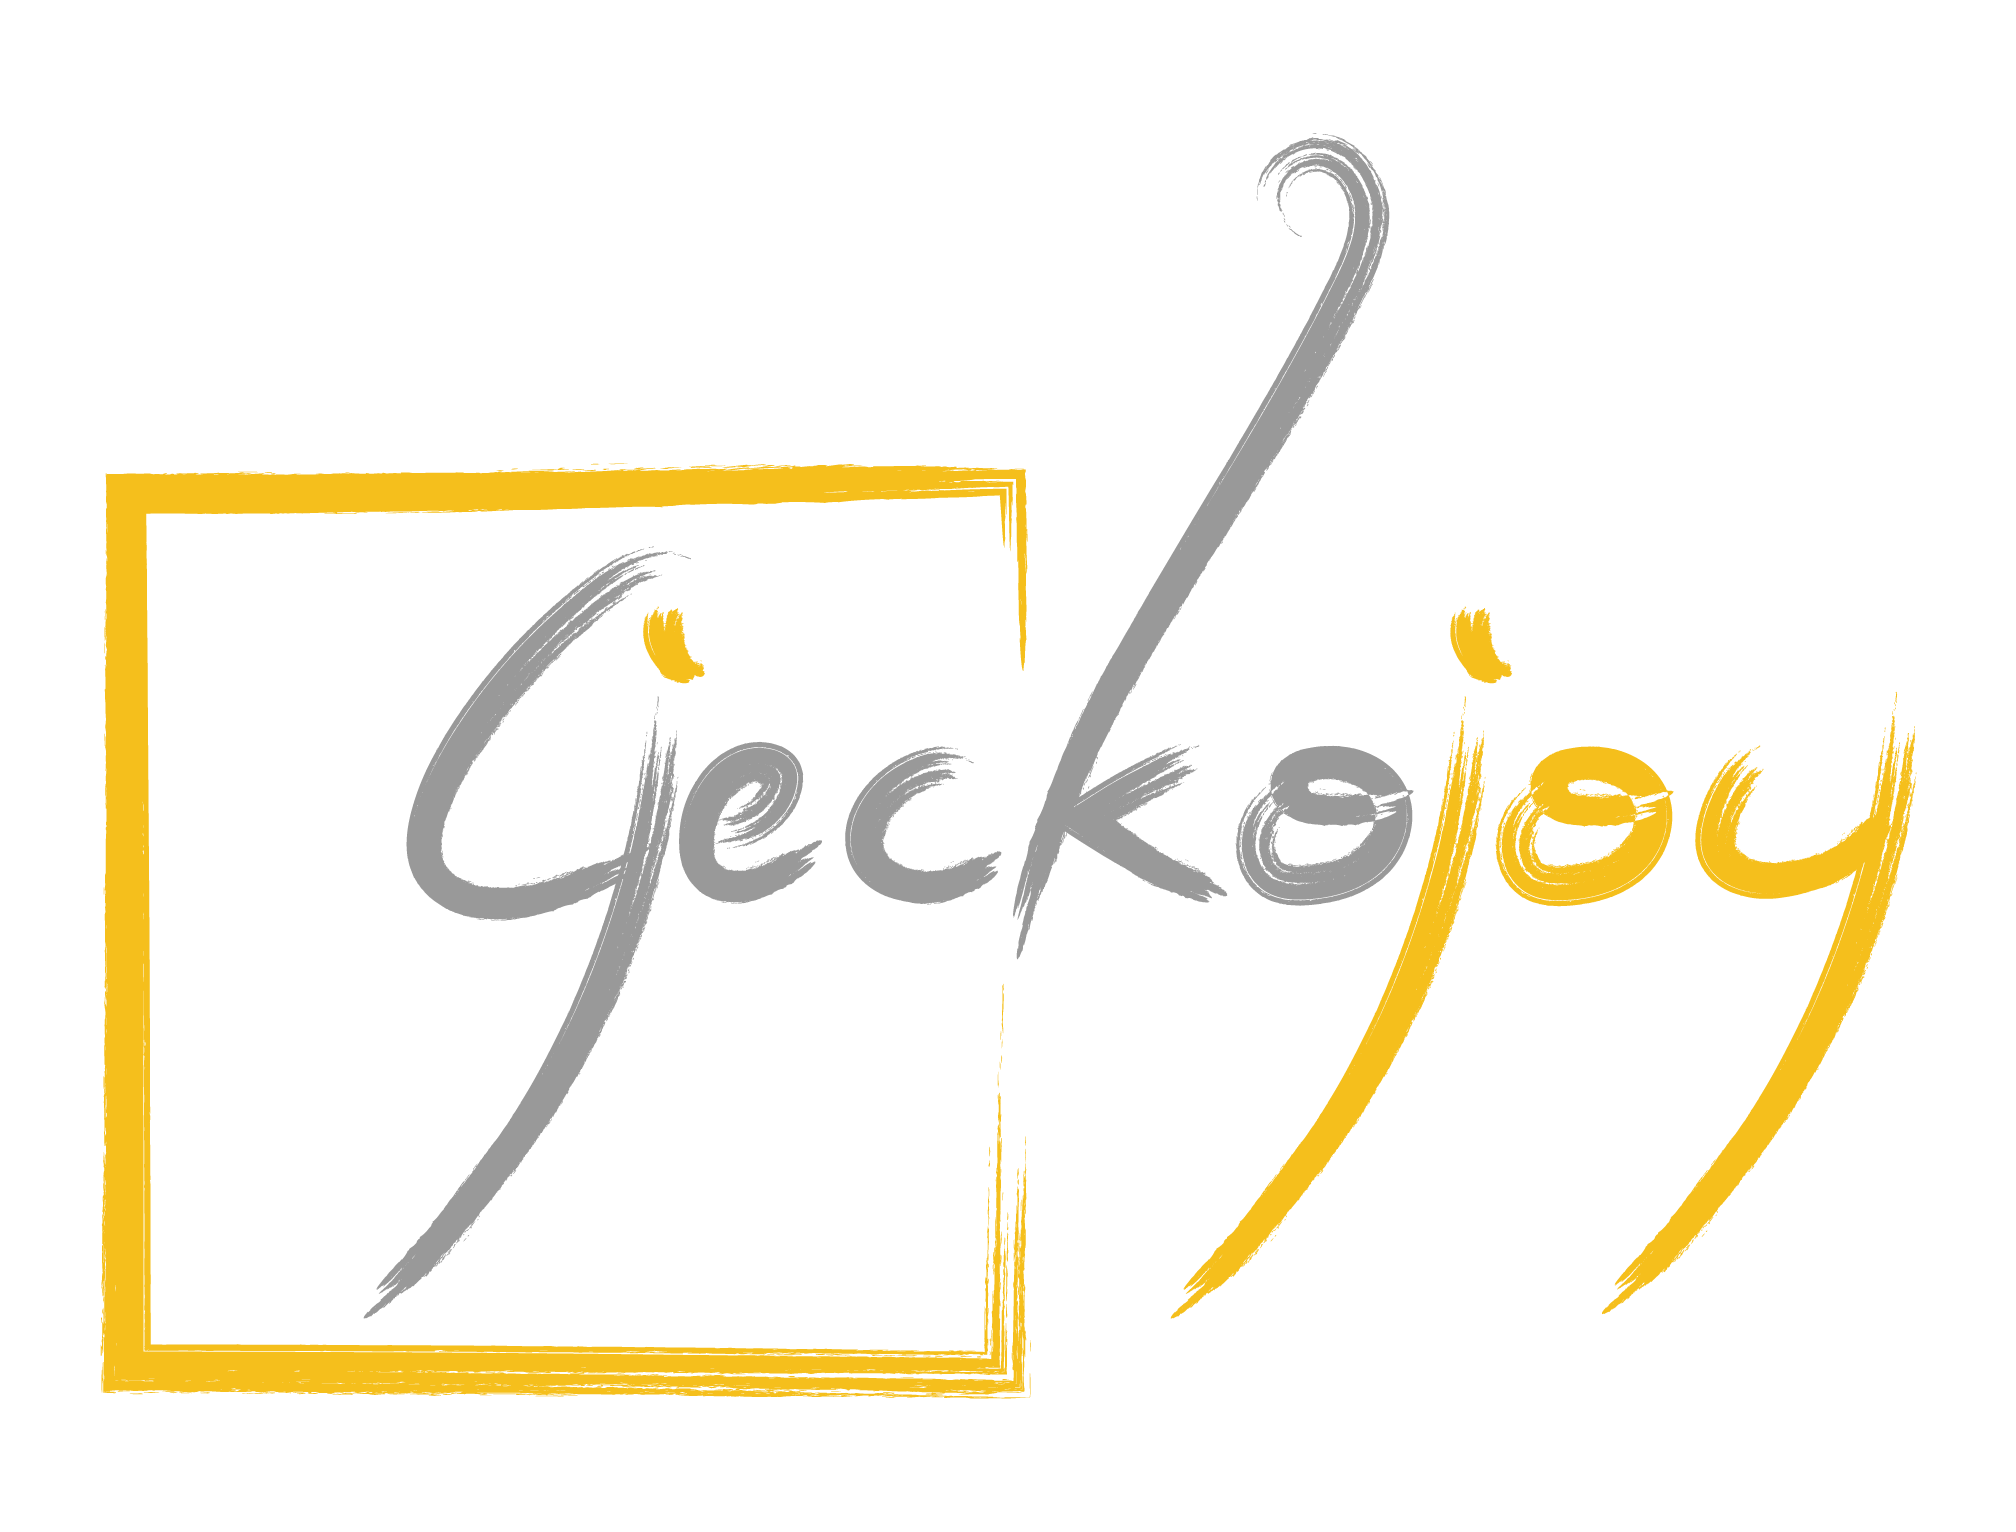 Gecko Joy - Website